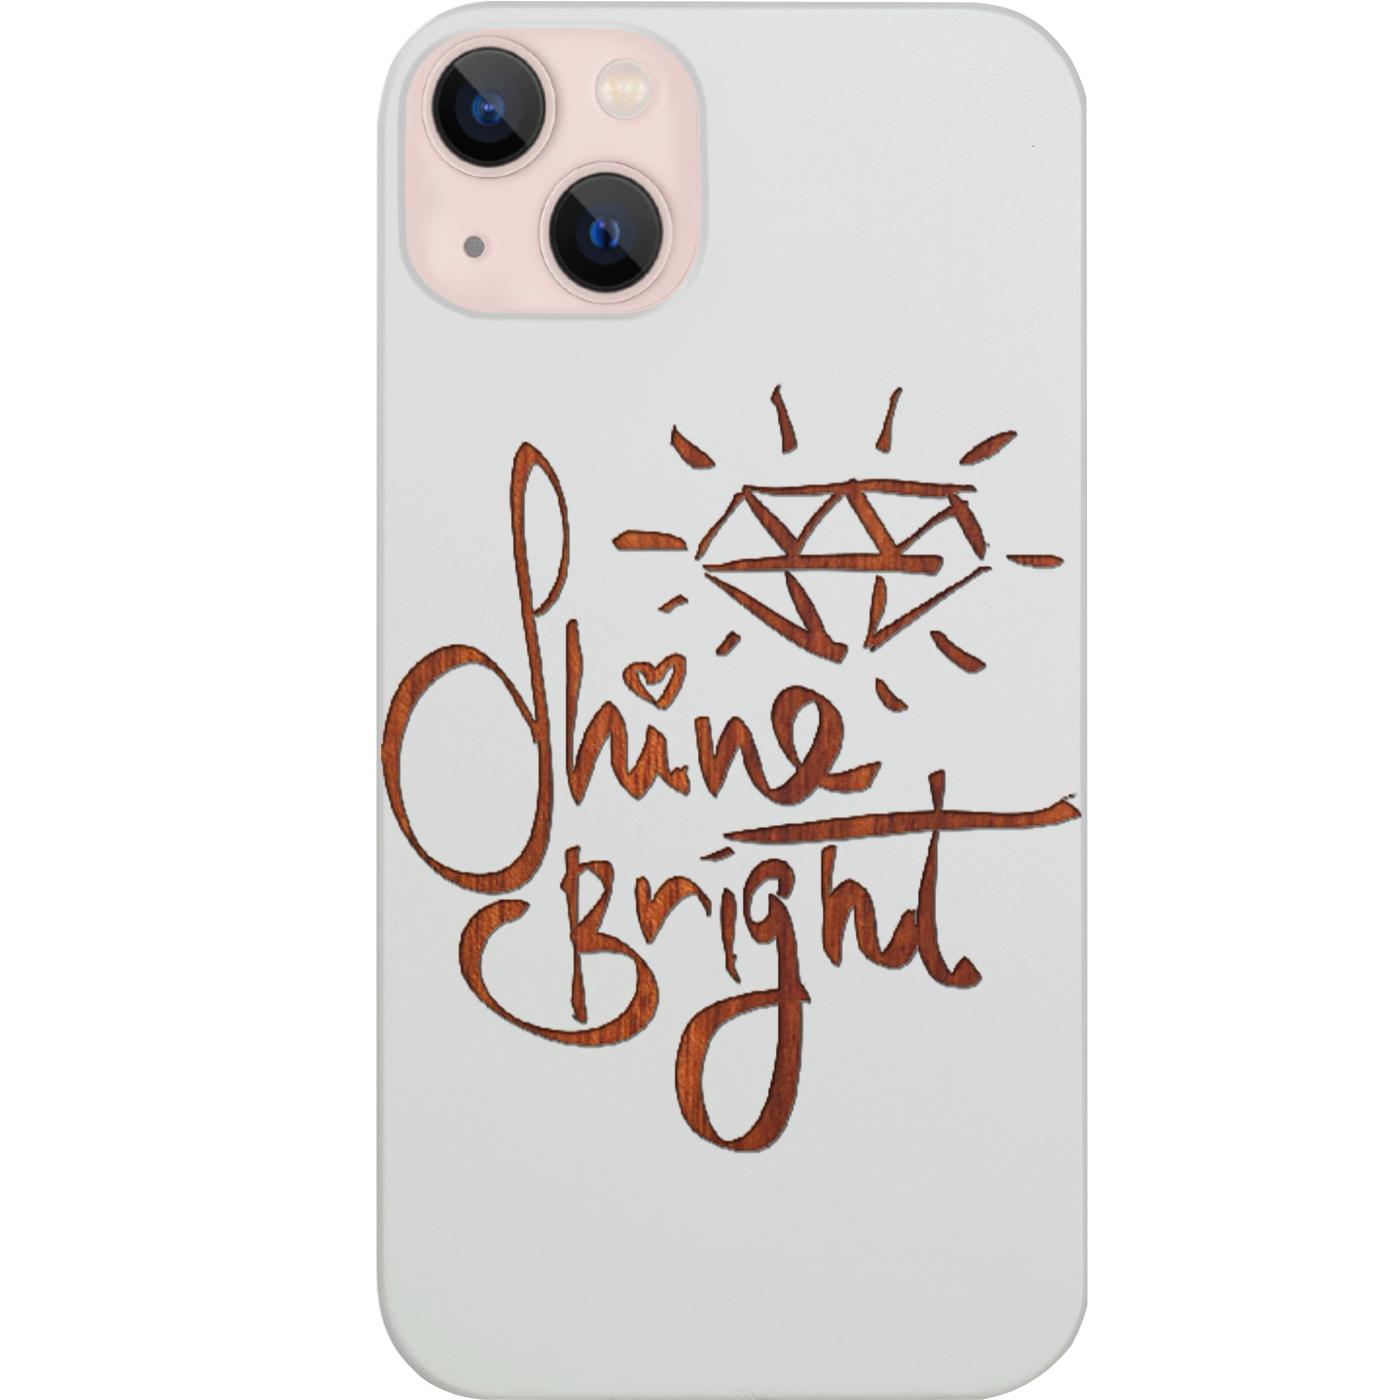 Shine Bright - Engraved Phone Case